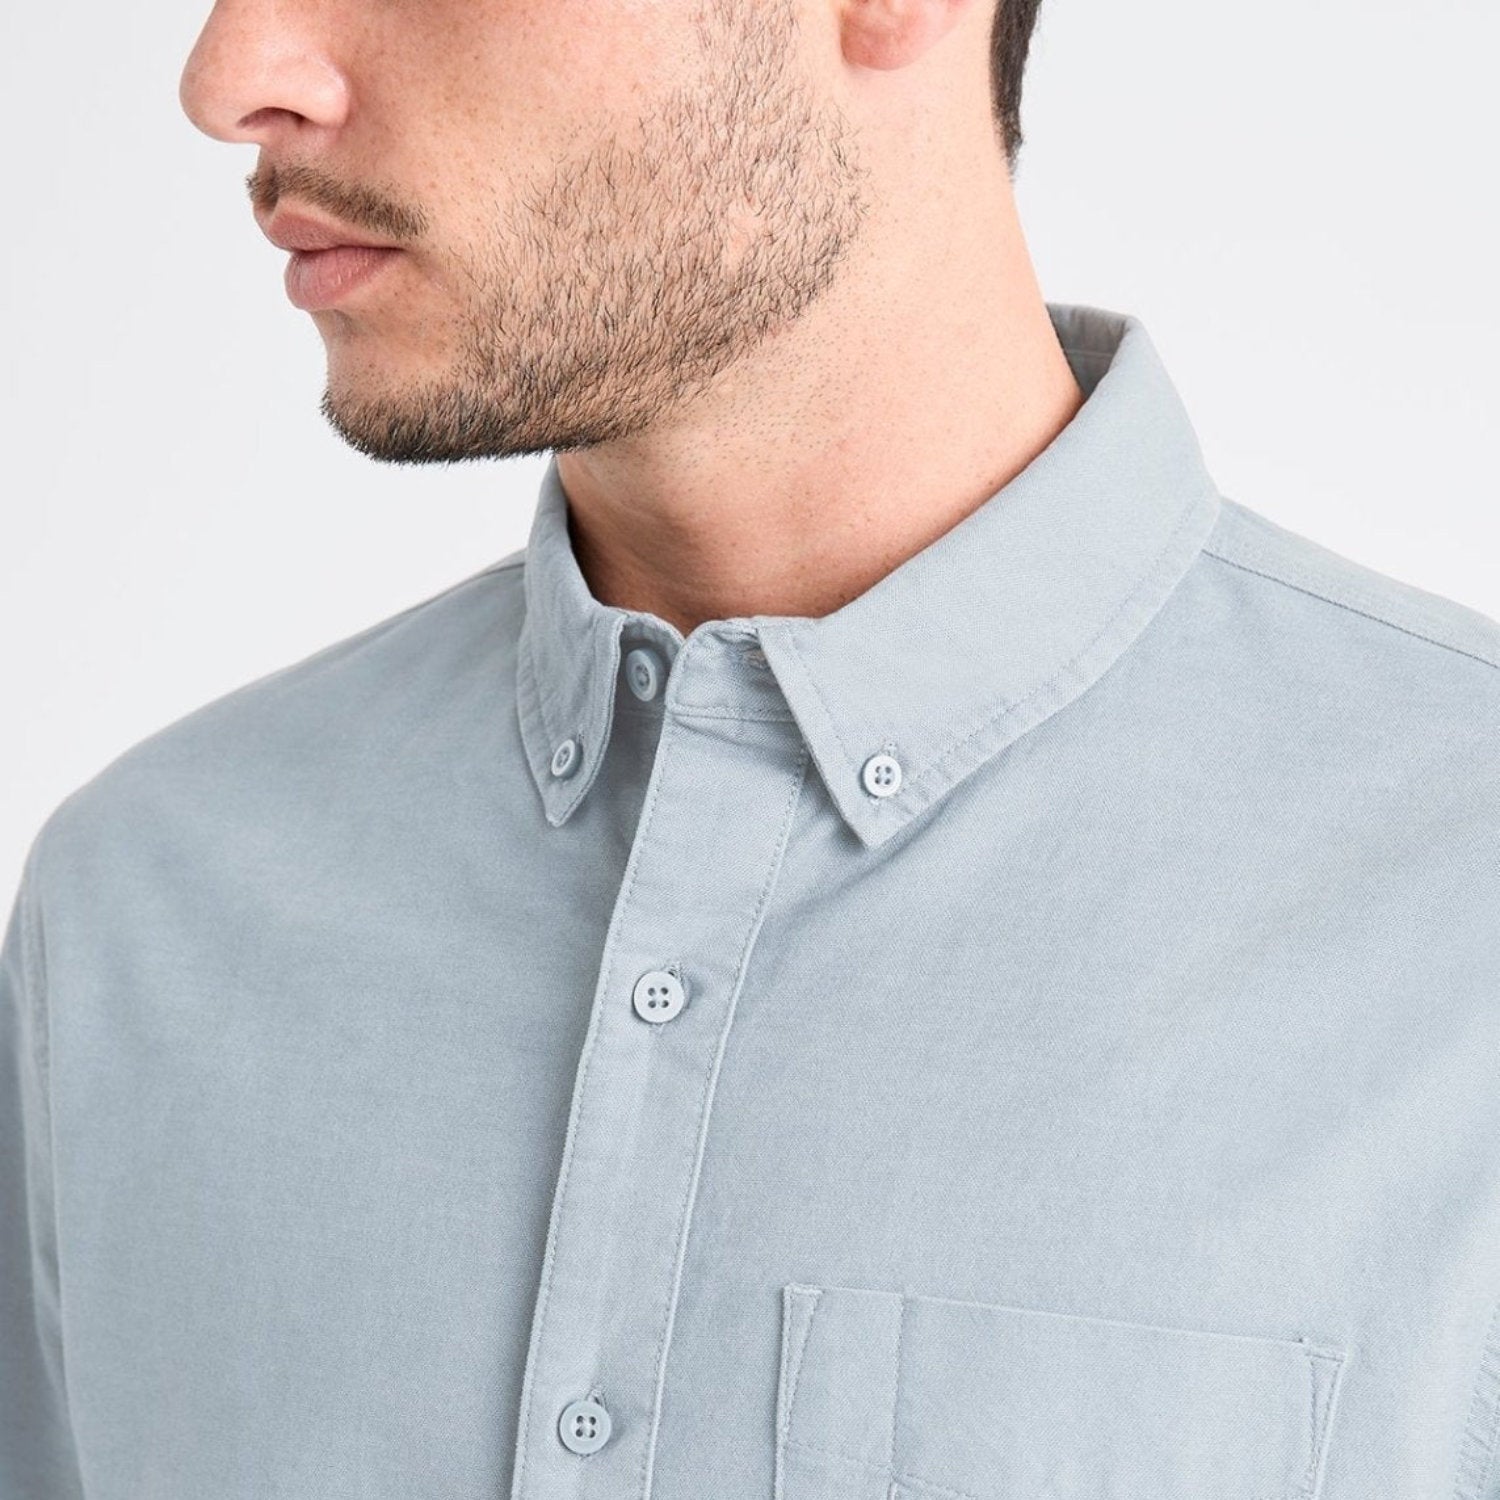 'Du/er Performance Stretch Button Down Shirt' in 'Fog Blue' colour